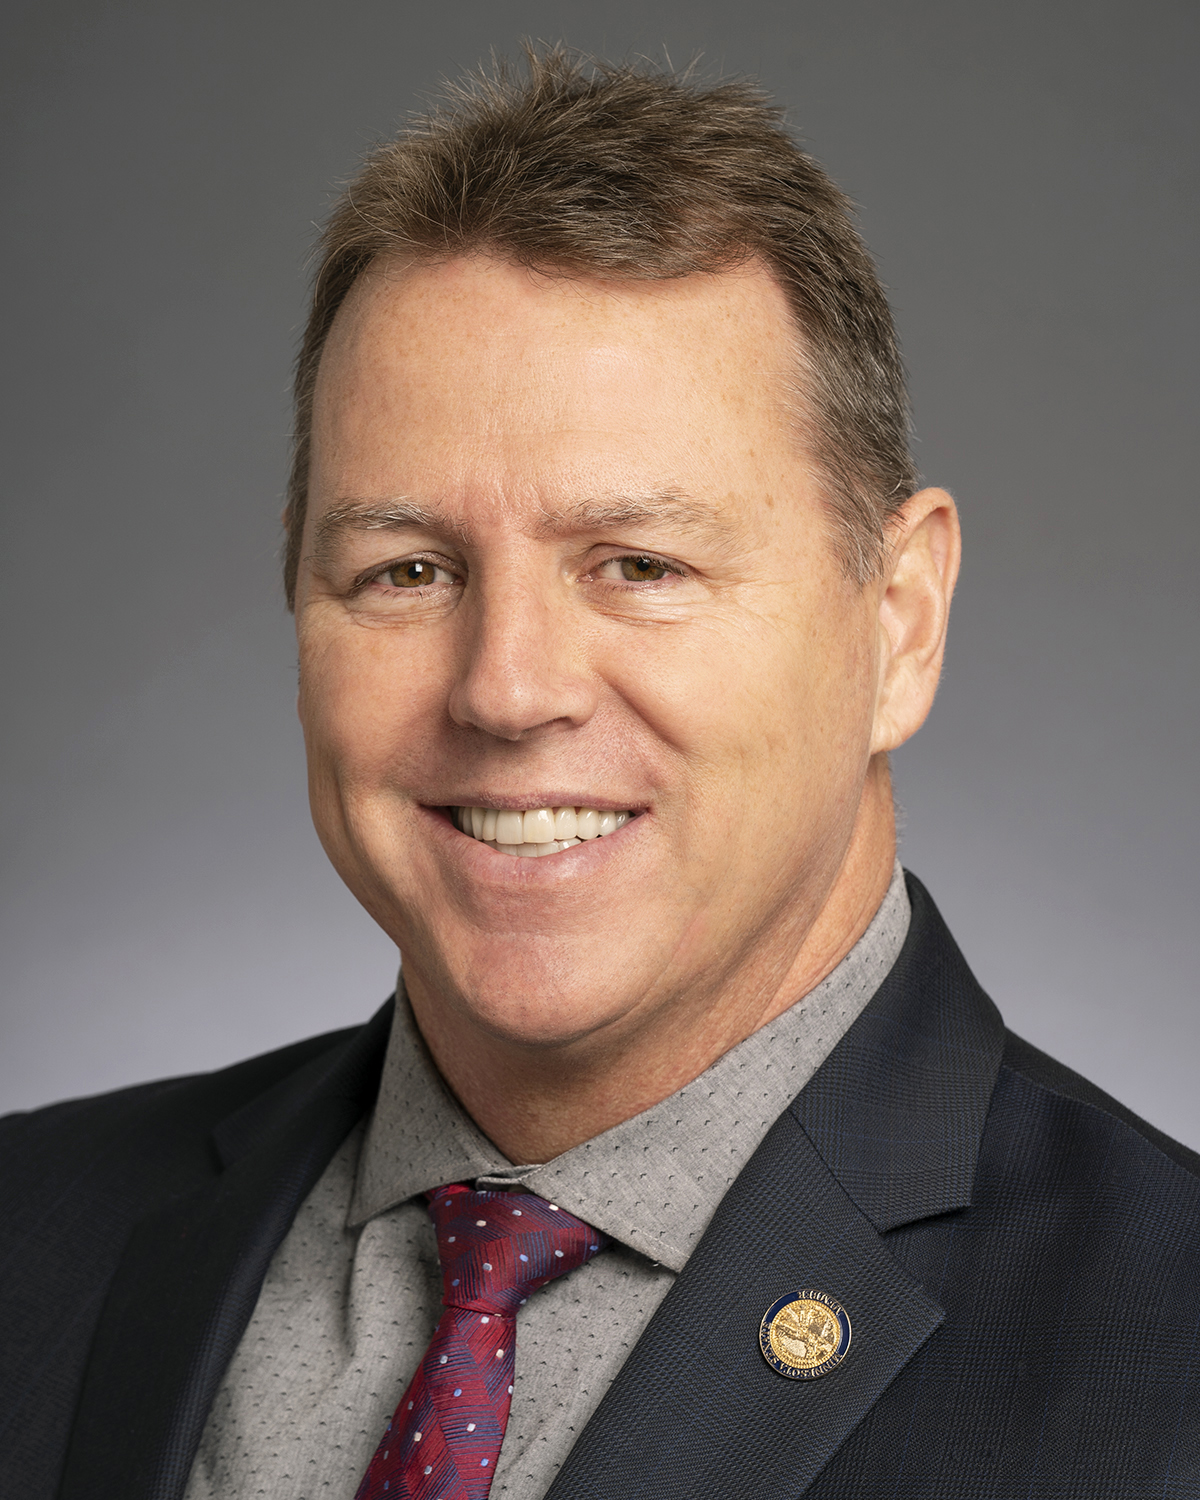  senator Nick Frentz